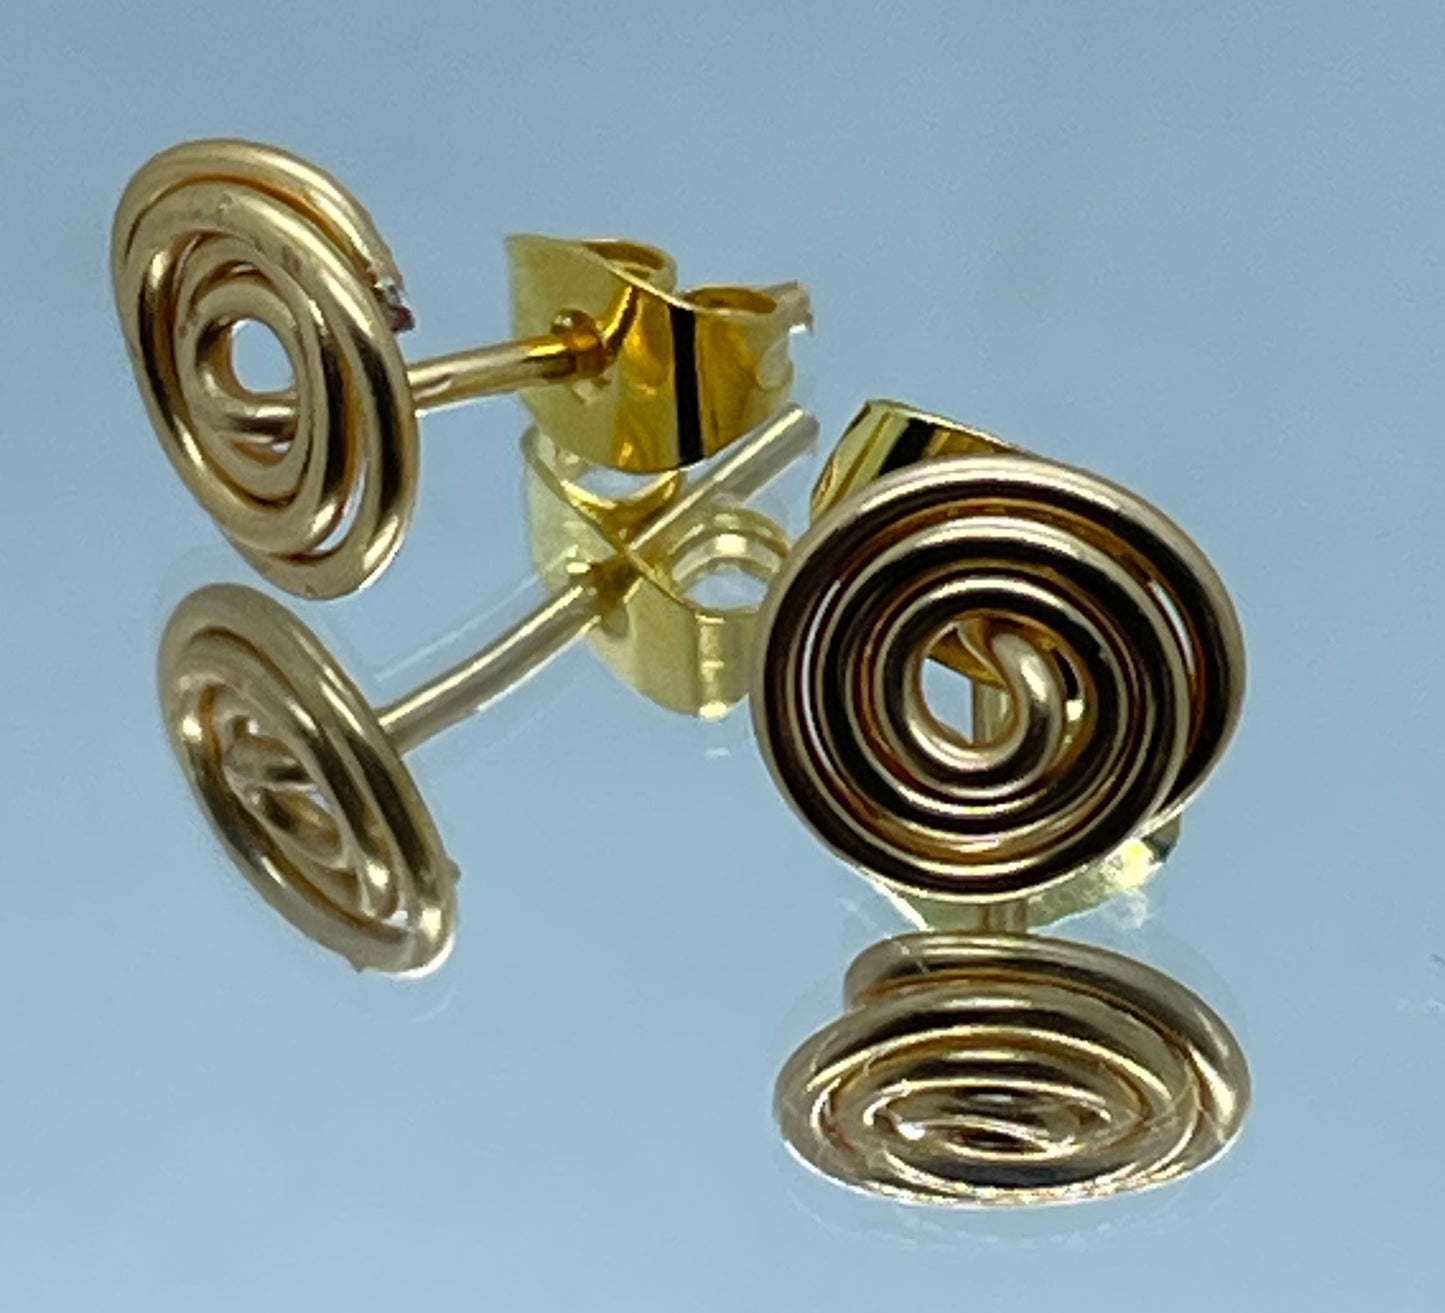 Silver wire coil stud earrings